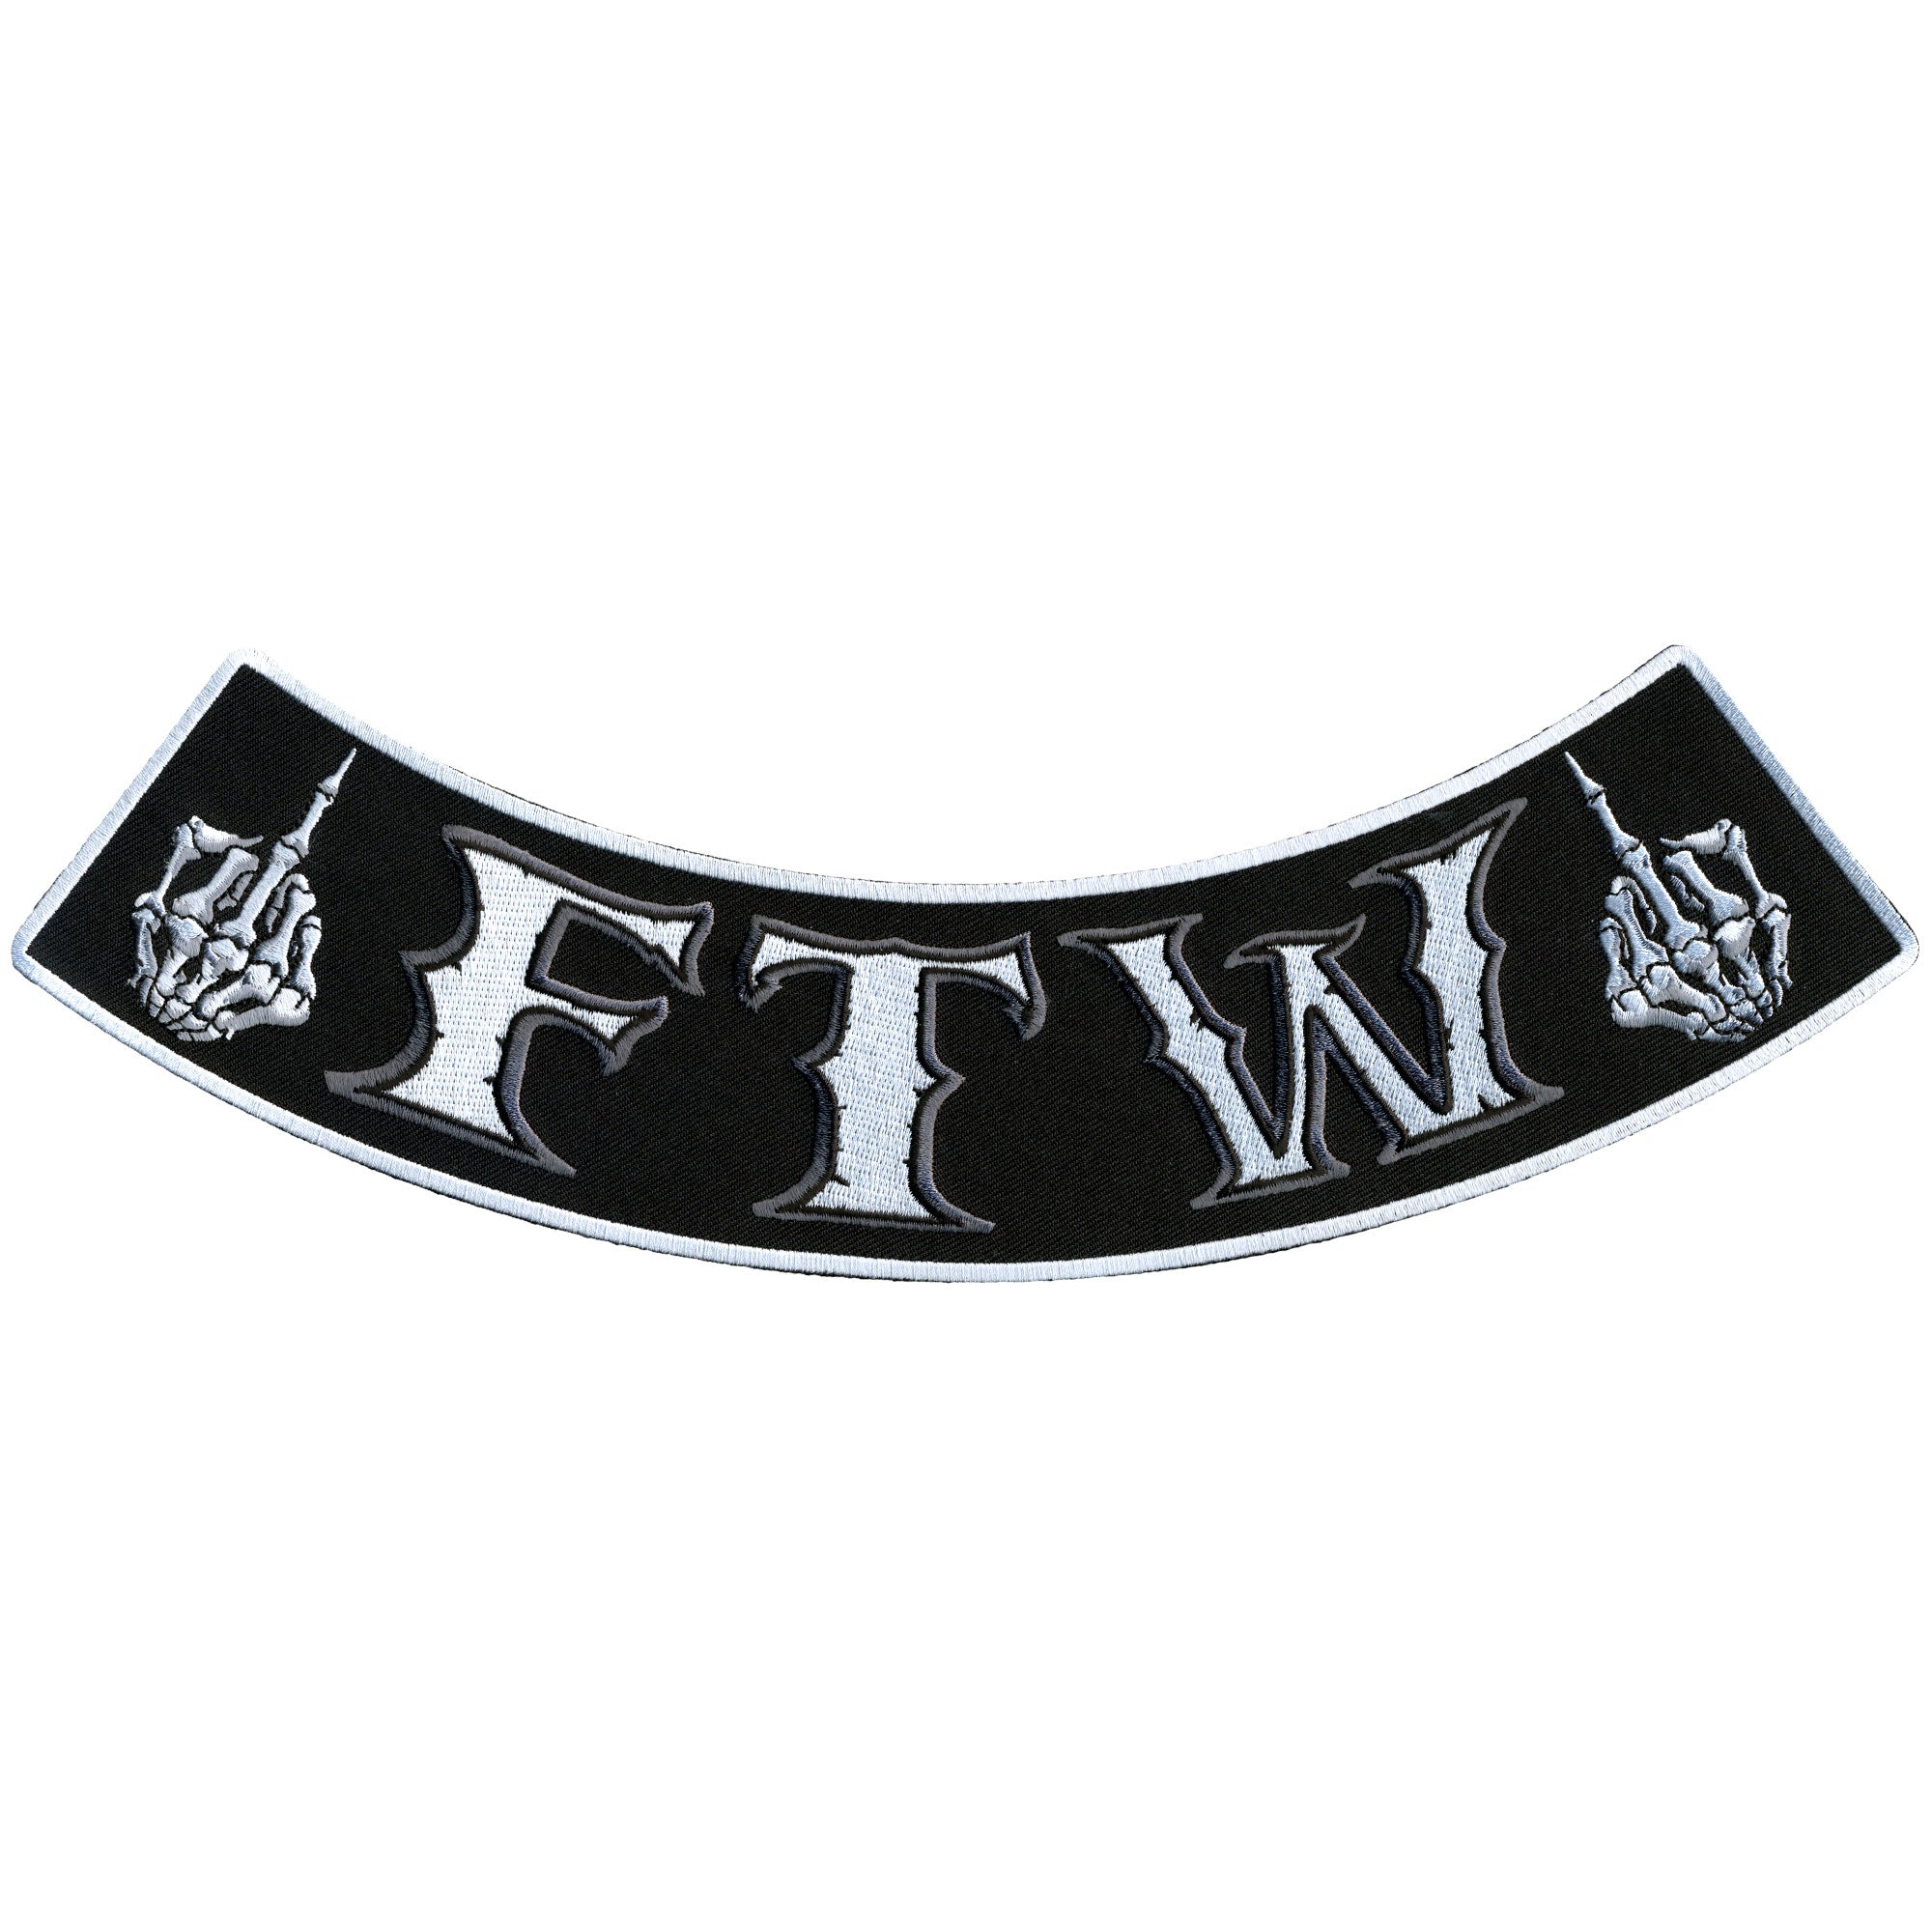 Hot Leathers FTW 12” X 3” Bottom Rocker Patch